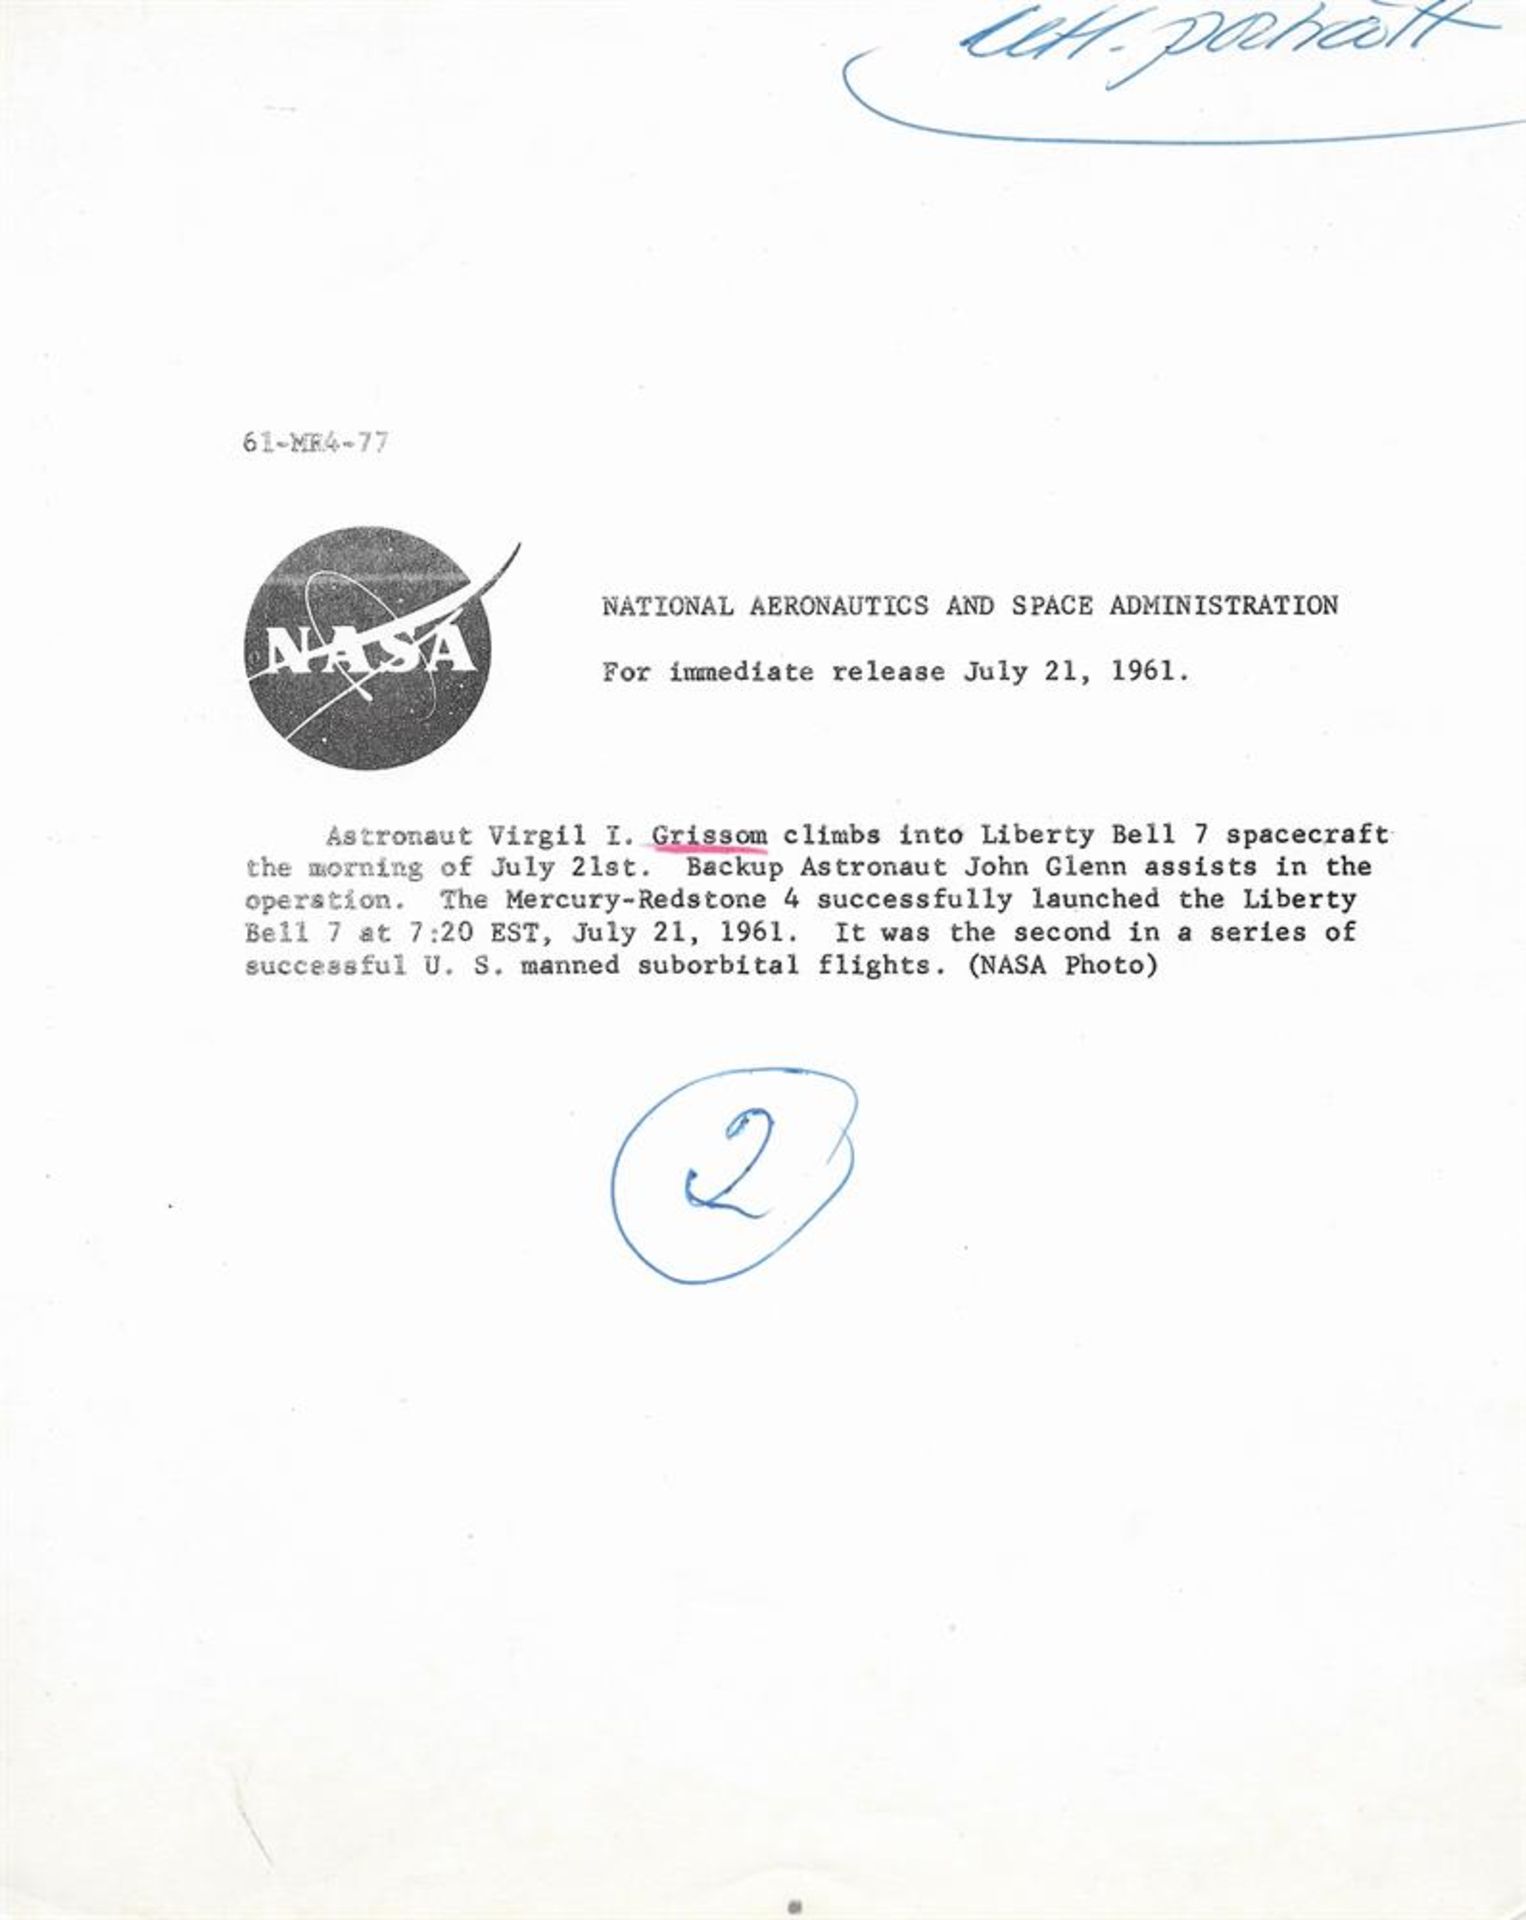 Second U.S. sub-orbital flight: the launch and recovery (4 views), Mercury-Redstone 4, 21 Jul 1961 - Image 5 of 9